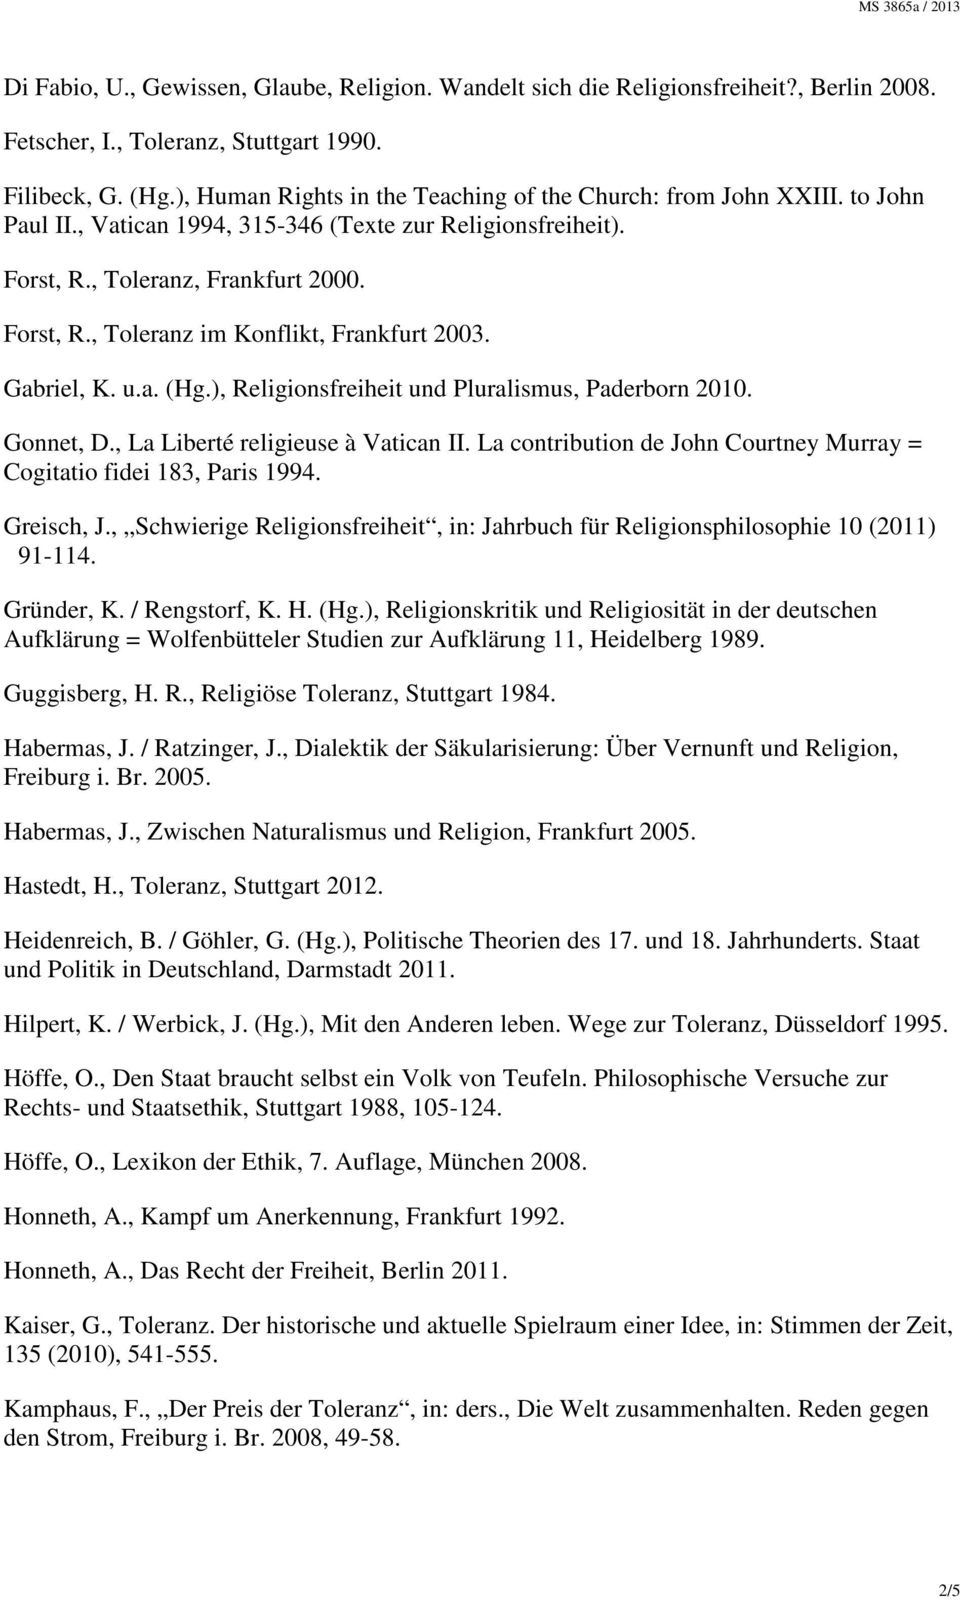 Gabriel, K. u.a. (Hg.), Religionsfreiheit und Pluralismus, Paderborn 2010. Gonnet, D., La Liberté religieuse à Vatican II. La contribution de John Courtney Murray = Cogitatio fidei 183, Paris 1994.